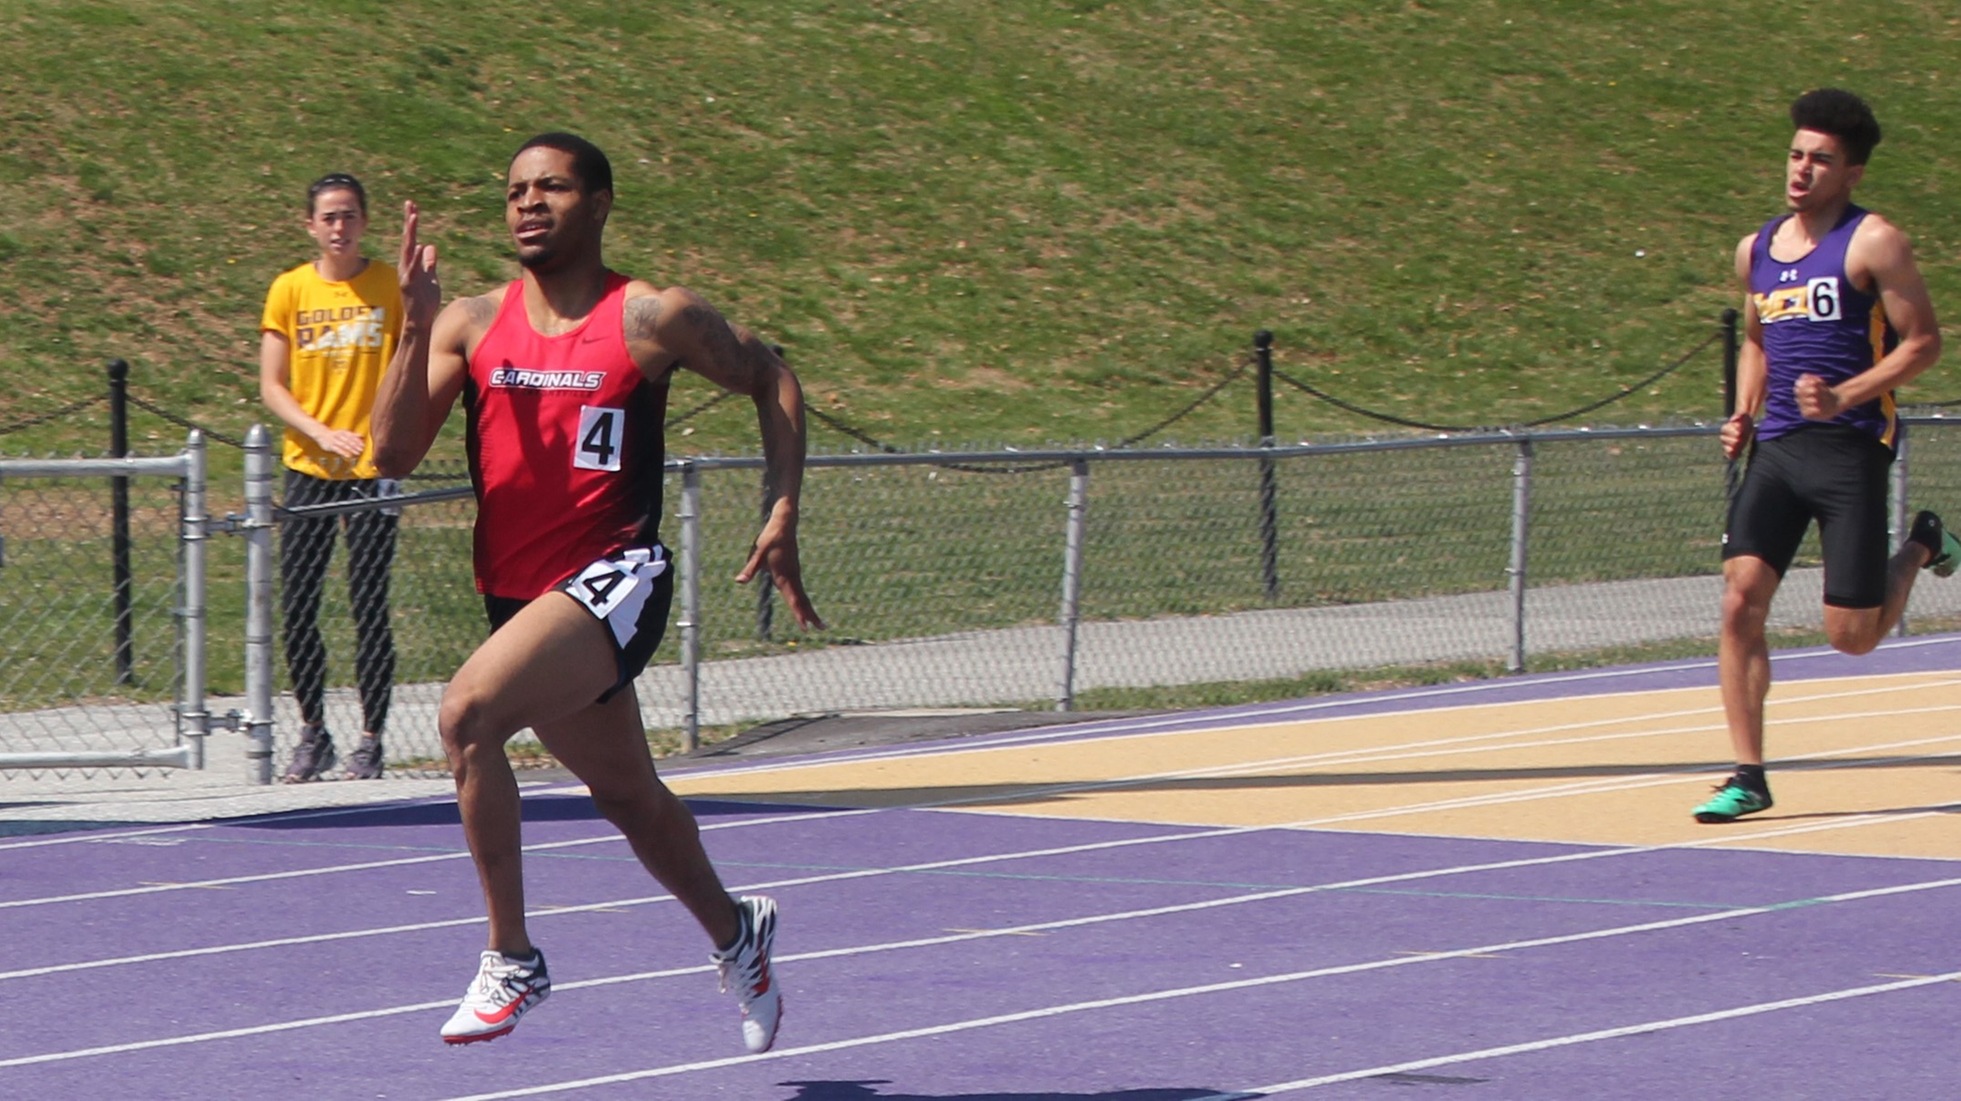 Freshman Da'Lon Harris runs :47.71 in 400 meters at Morgan State Meet to qualify for NJCAA Track & Field Championships